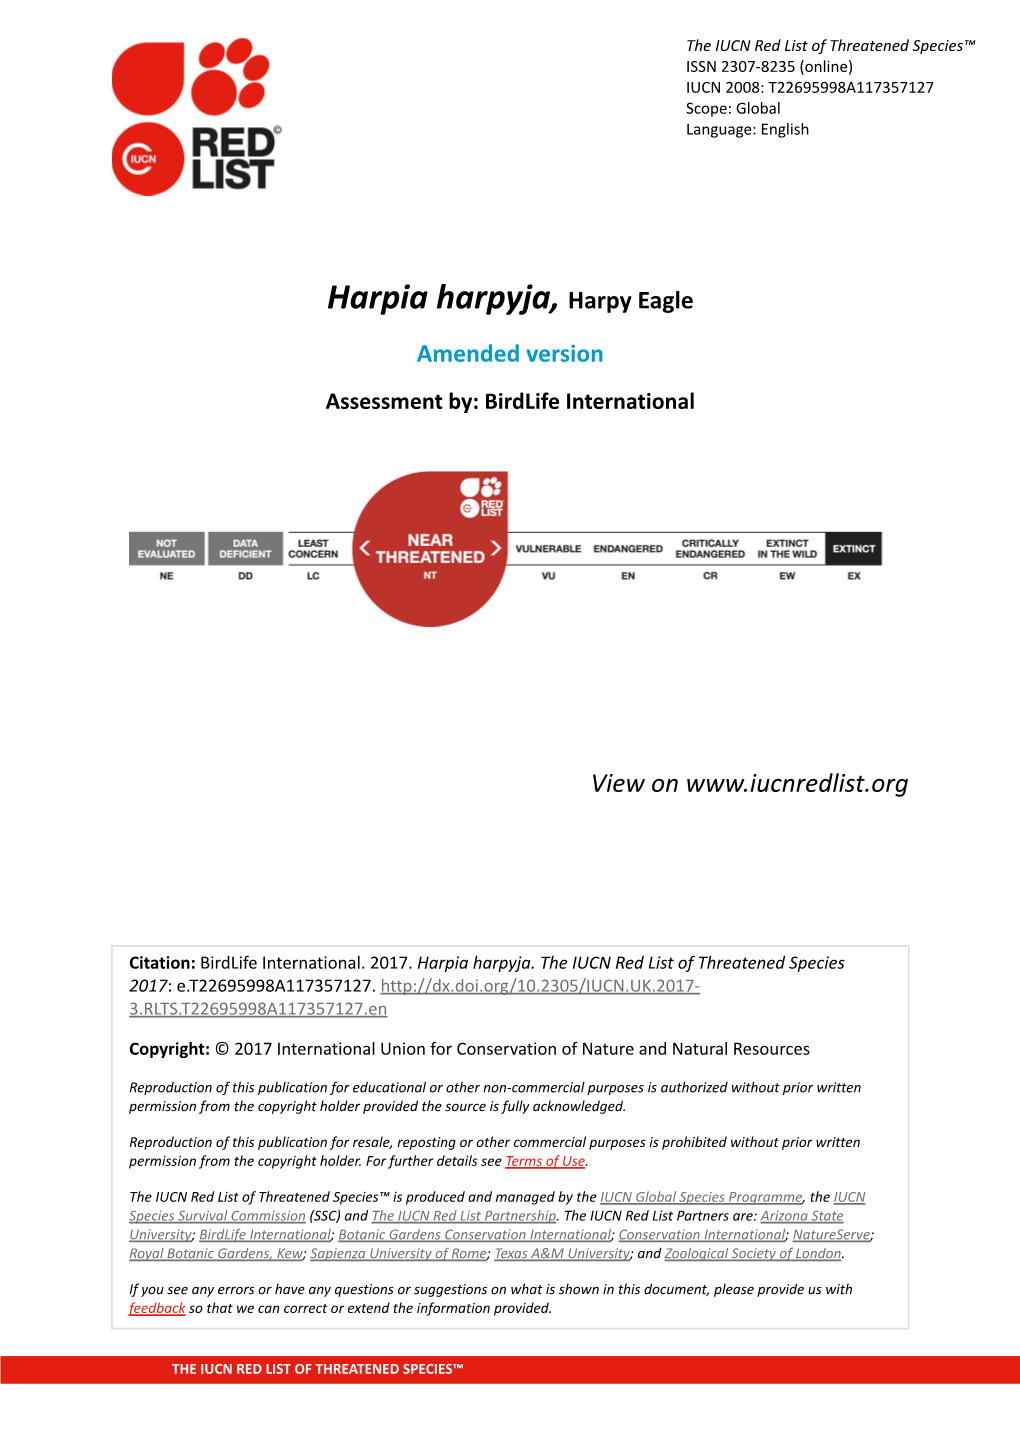 Harpia Harpyja, Harpy Eagle Amended Version Assessment By: Birdlife International